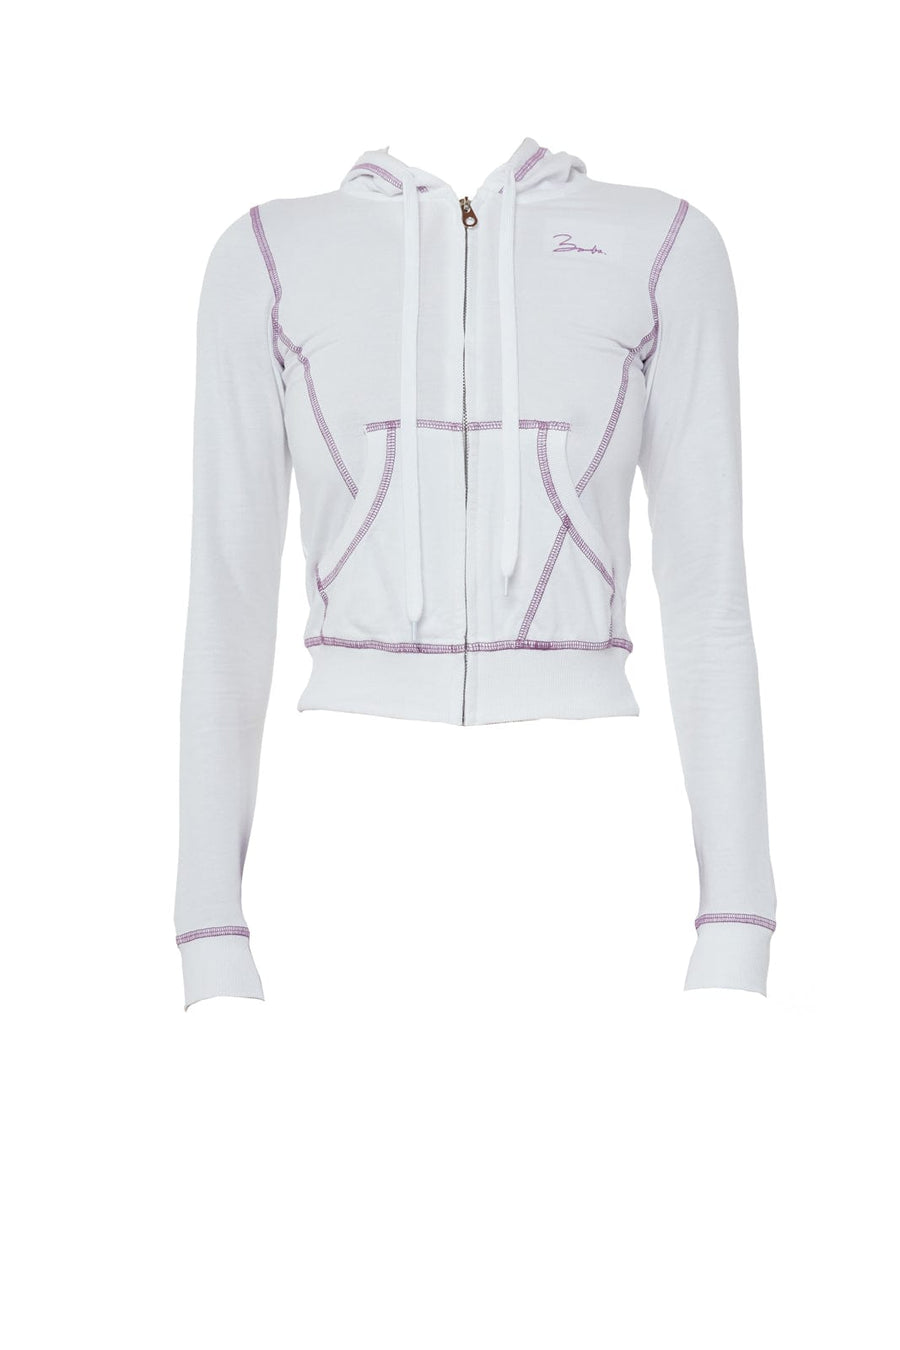 ESPRITE jacket- bianco/ violet  -  CLOTHING  -  B Ā M B A S W I M